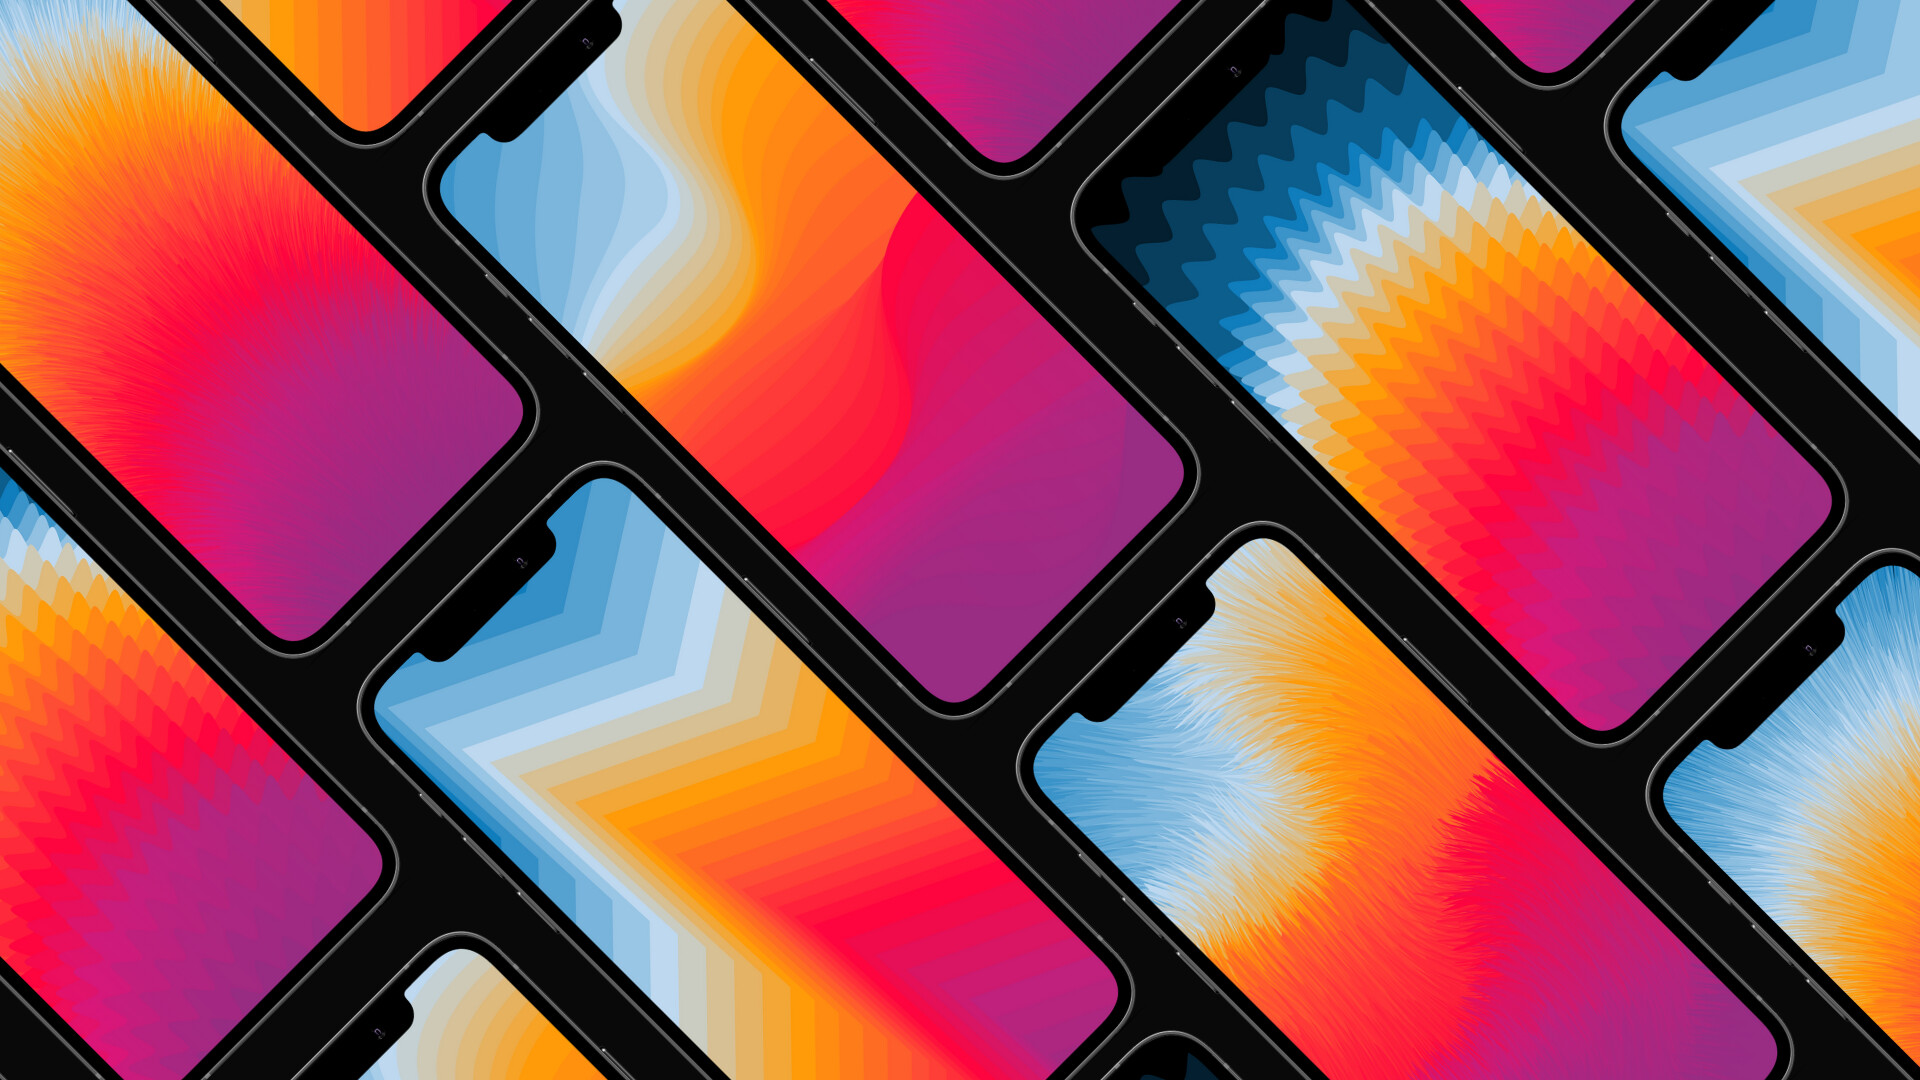 ArtStation - Iphone Wallpapers 4k - Big Sur OS Colors